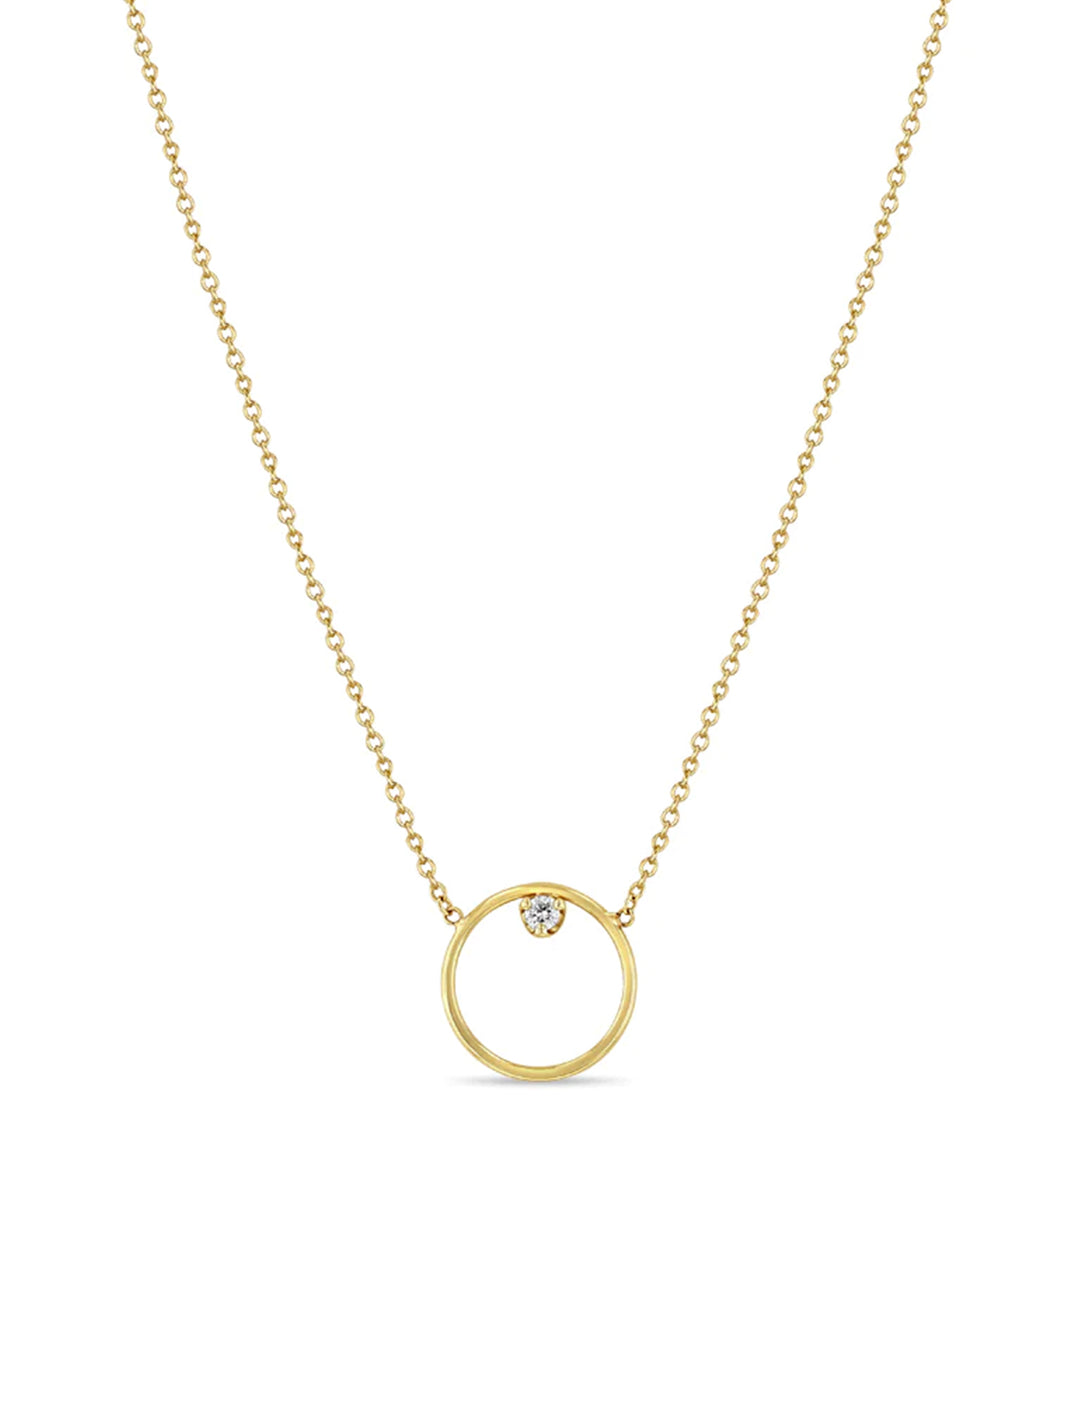 14k circle and diamond necklace | 16-17-18" length